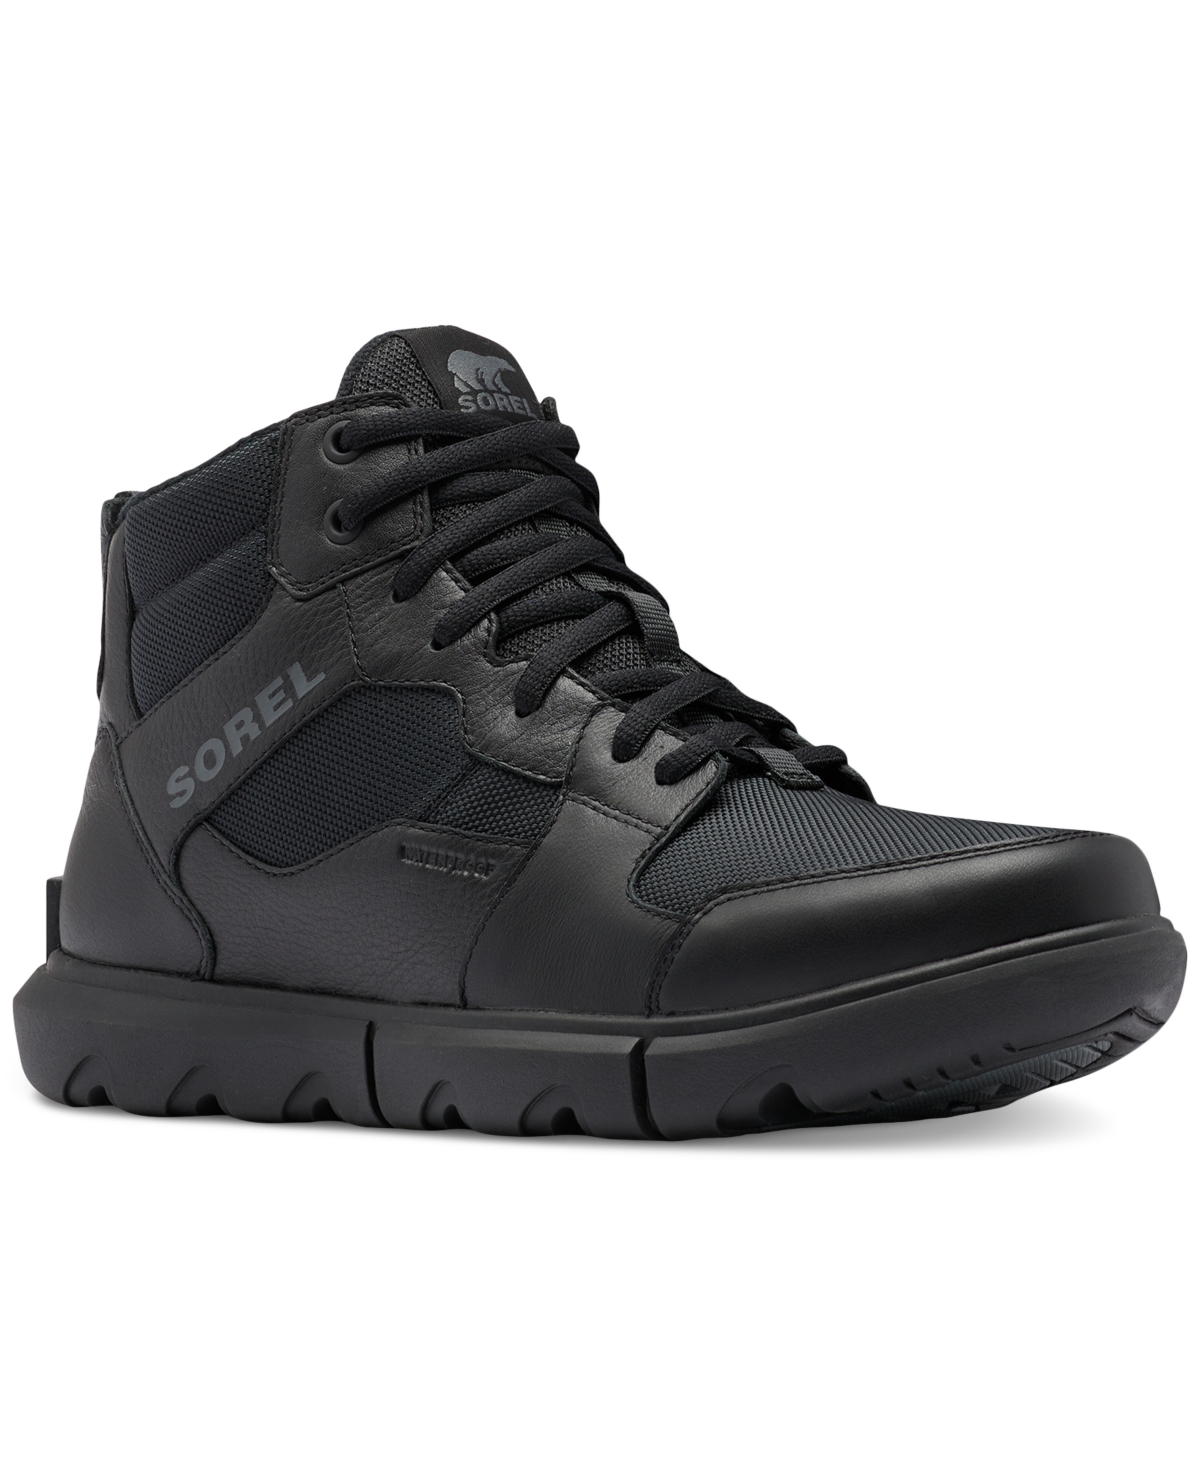 Sorel Men's Explorer Waterproof High Top Sneakers - 150th Anniversary Exclusive In Black